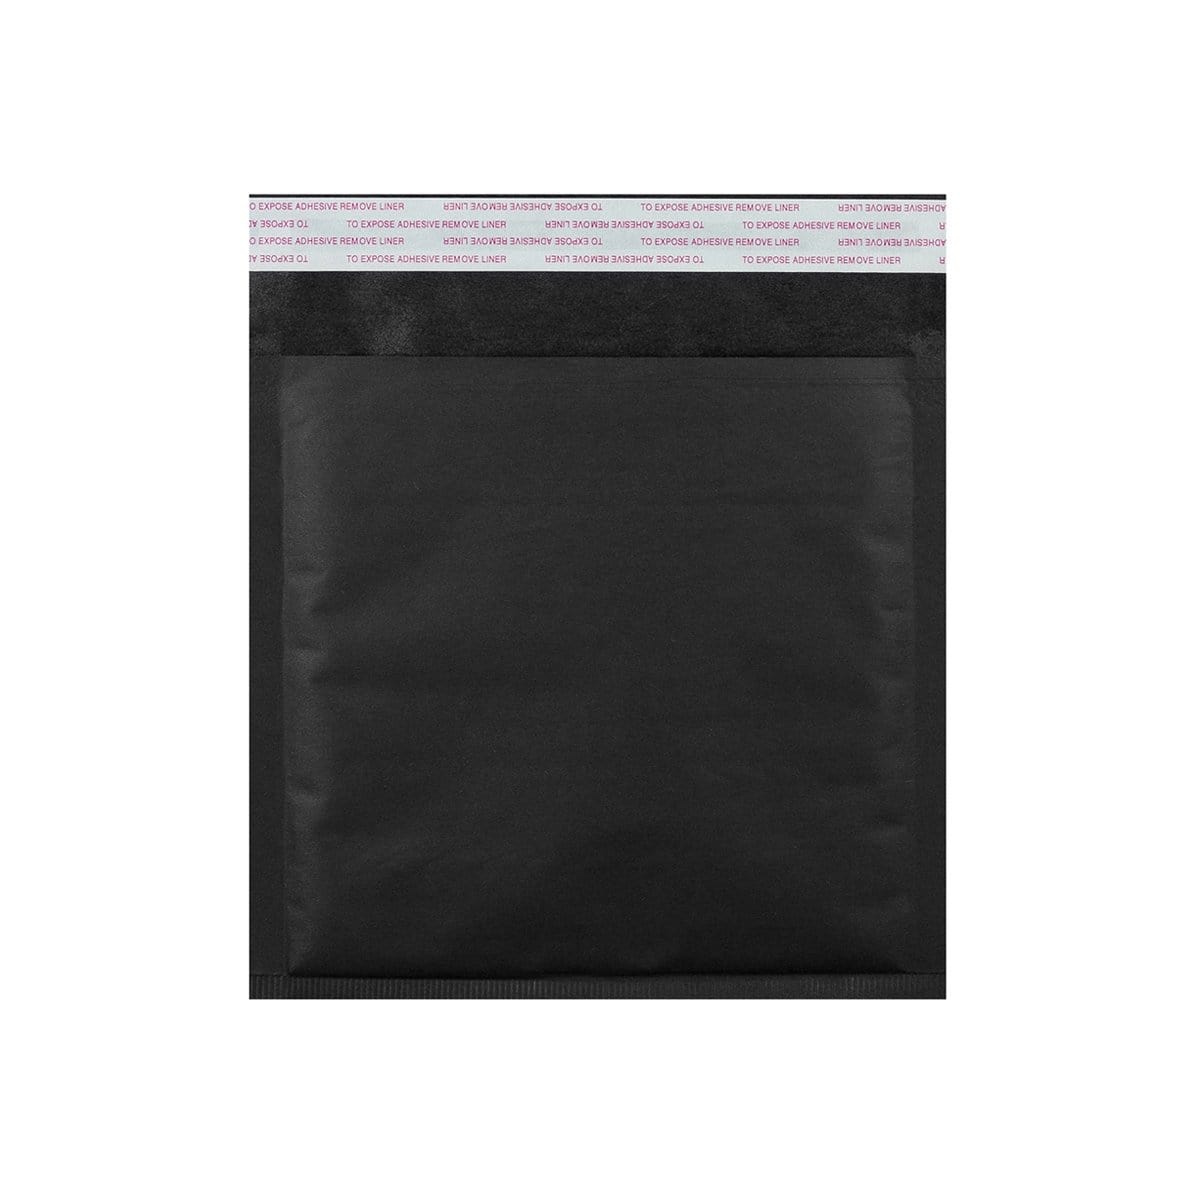 products/black-padded-envelopes-165x165_1_1.jpg